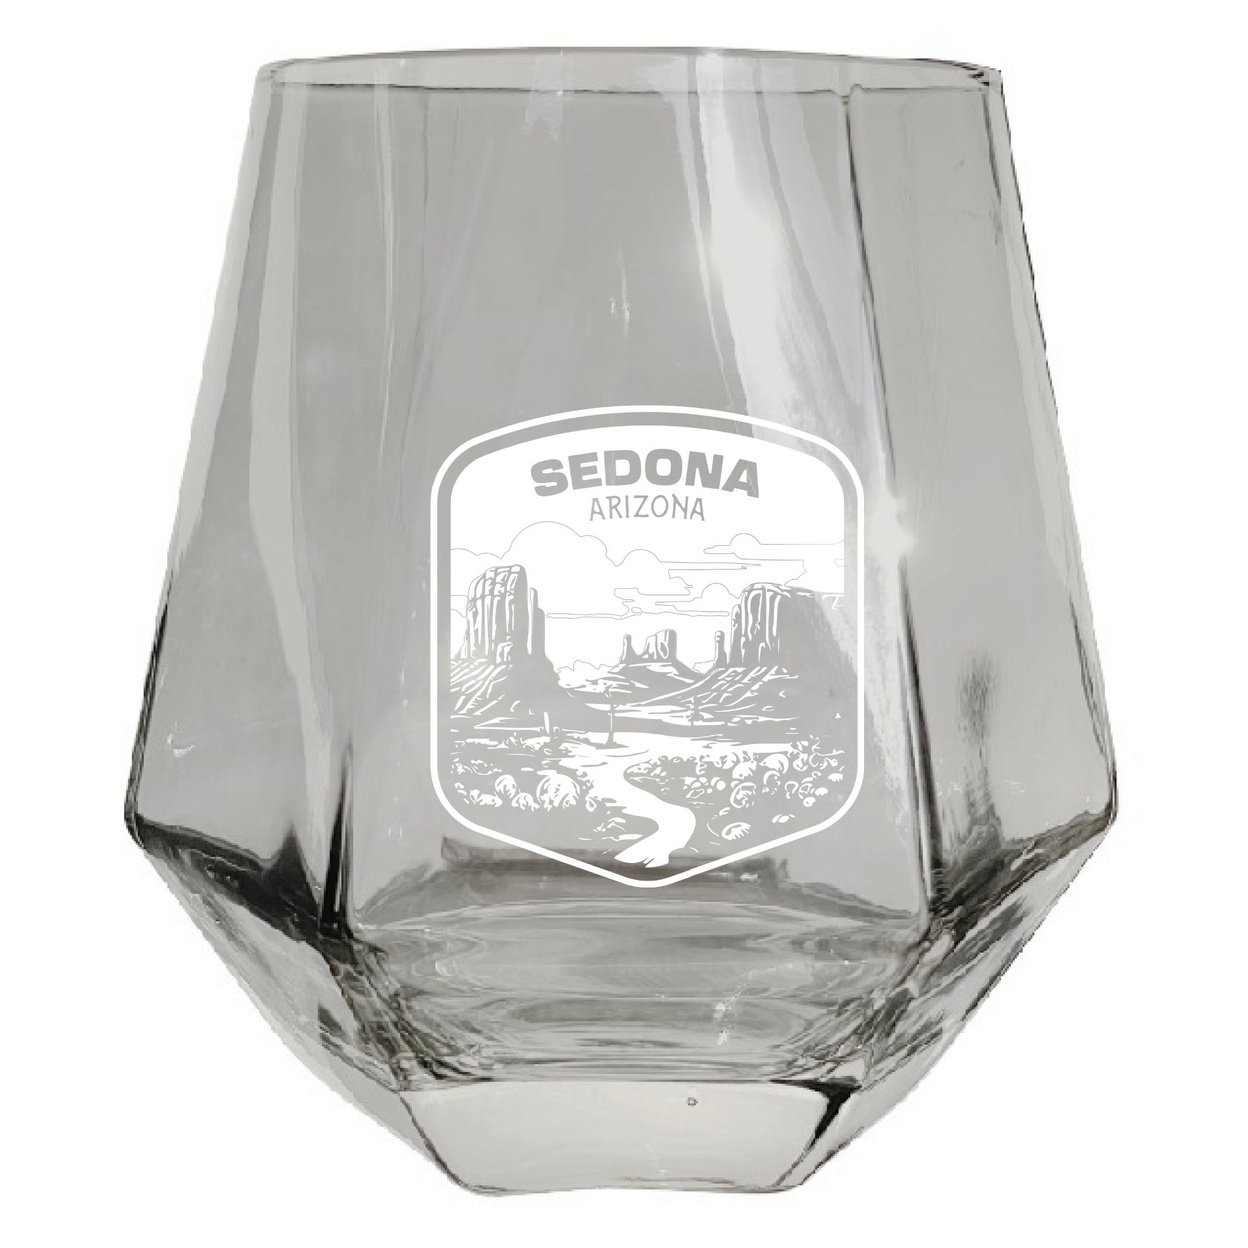 Sedona Arizona Souvenir Wine Glass EngravedDiamond 15 Oz Clear Iridescent - Clear,,4-Pack